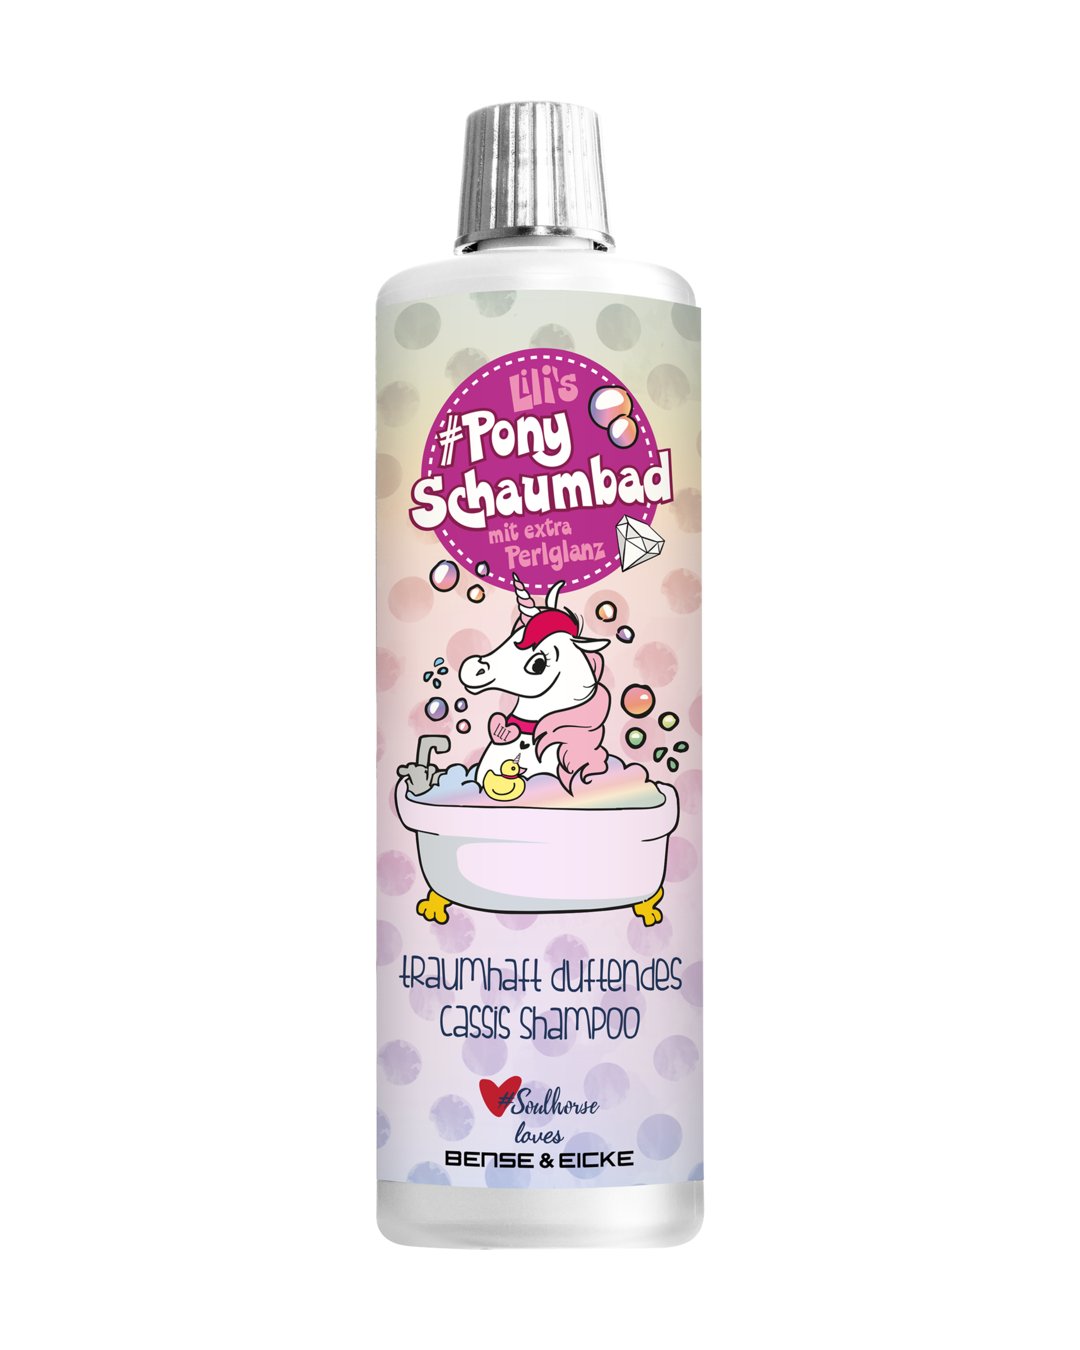 Shampoo Lili's Pony Schaumbad